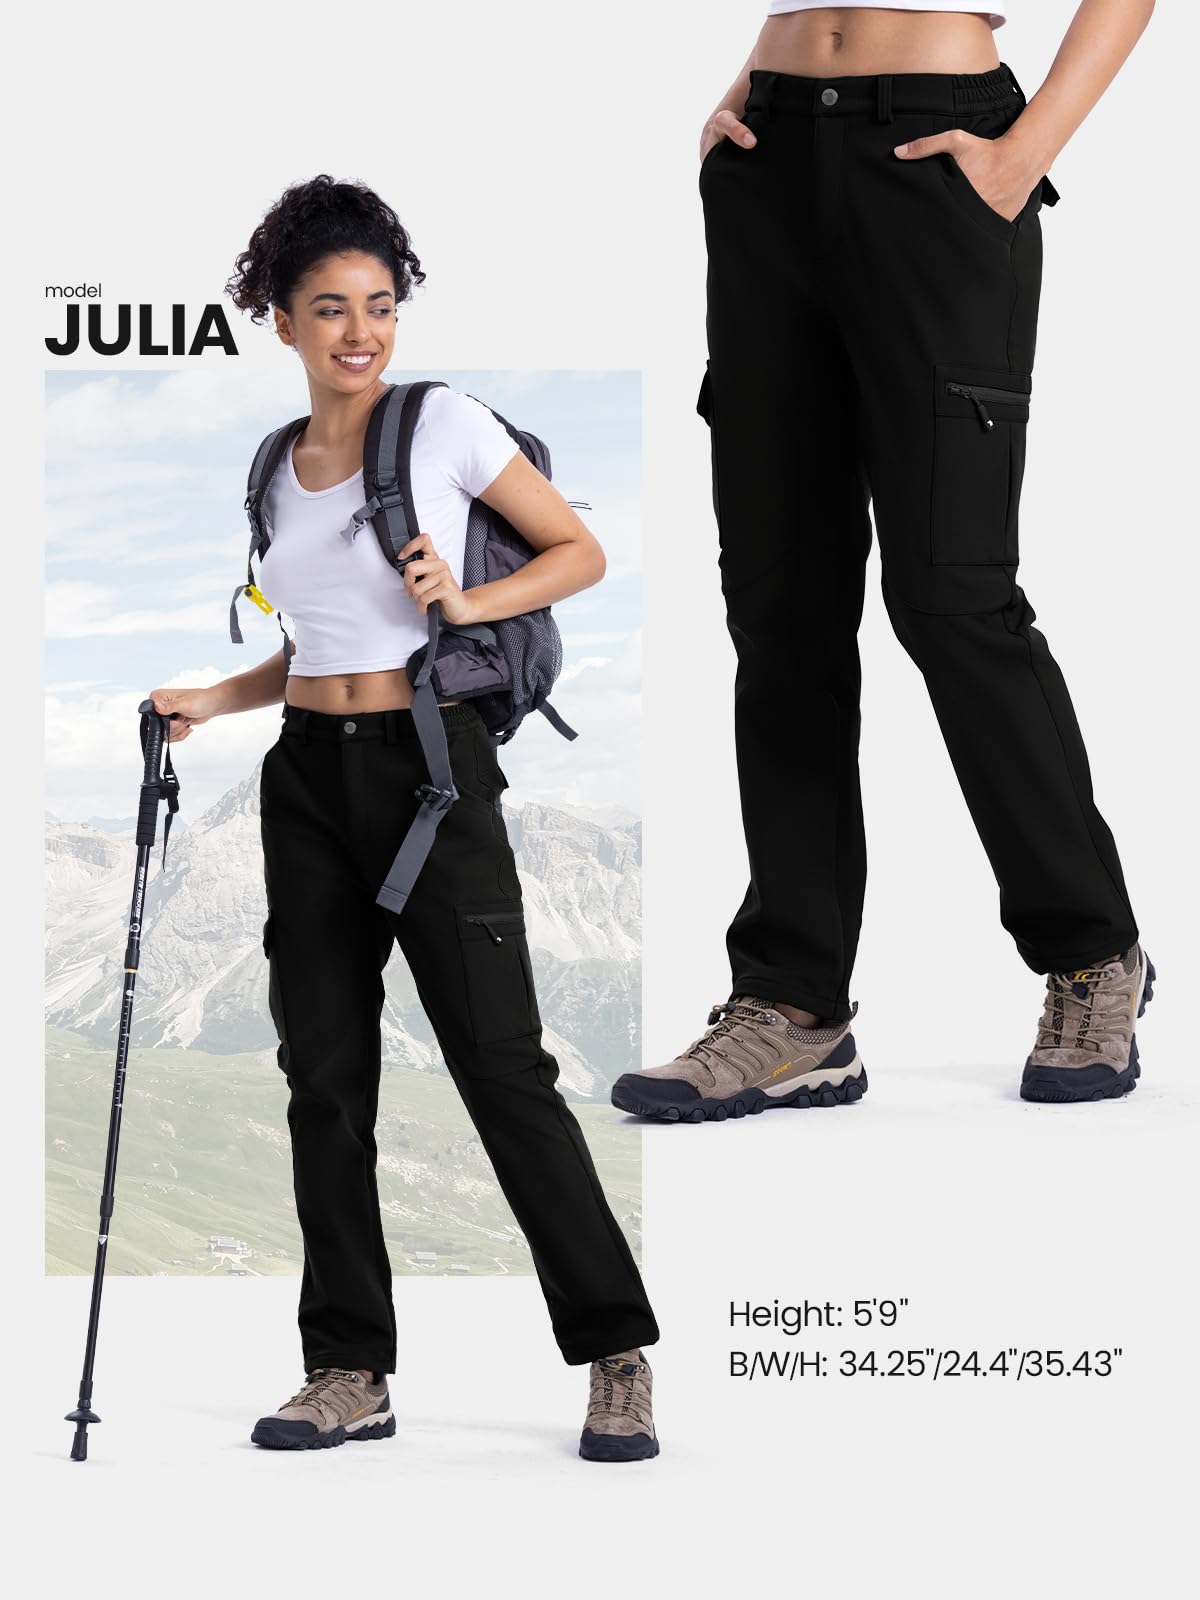 TBMPOY Women's Skiing Hiking Cargo Pants Outdoor Waterproof Windproof Softshell Fleece Snow Pants Black M